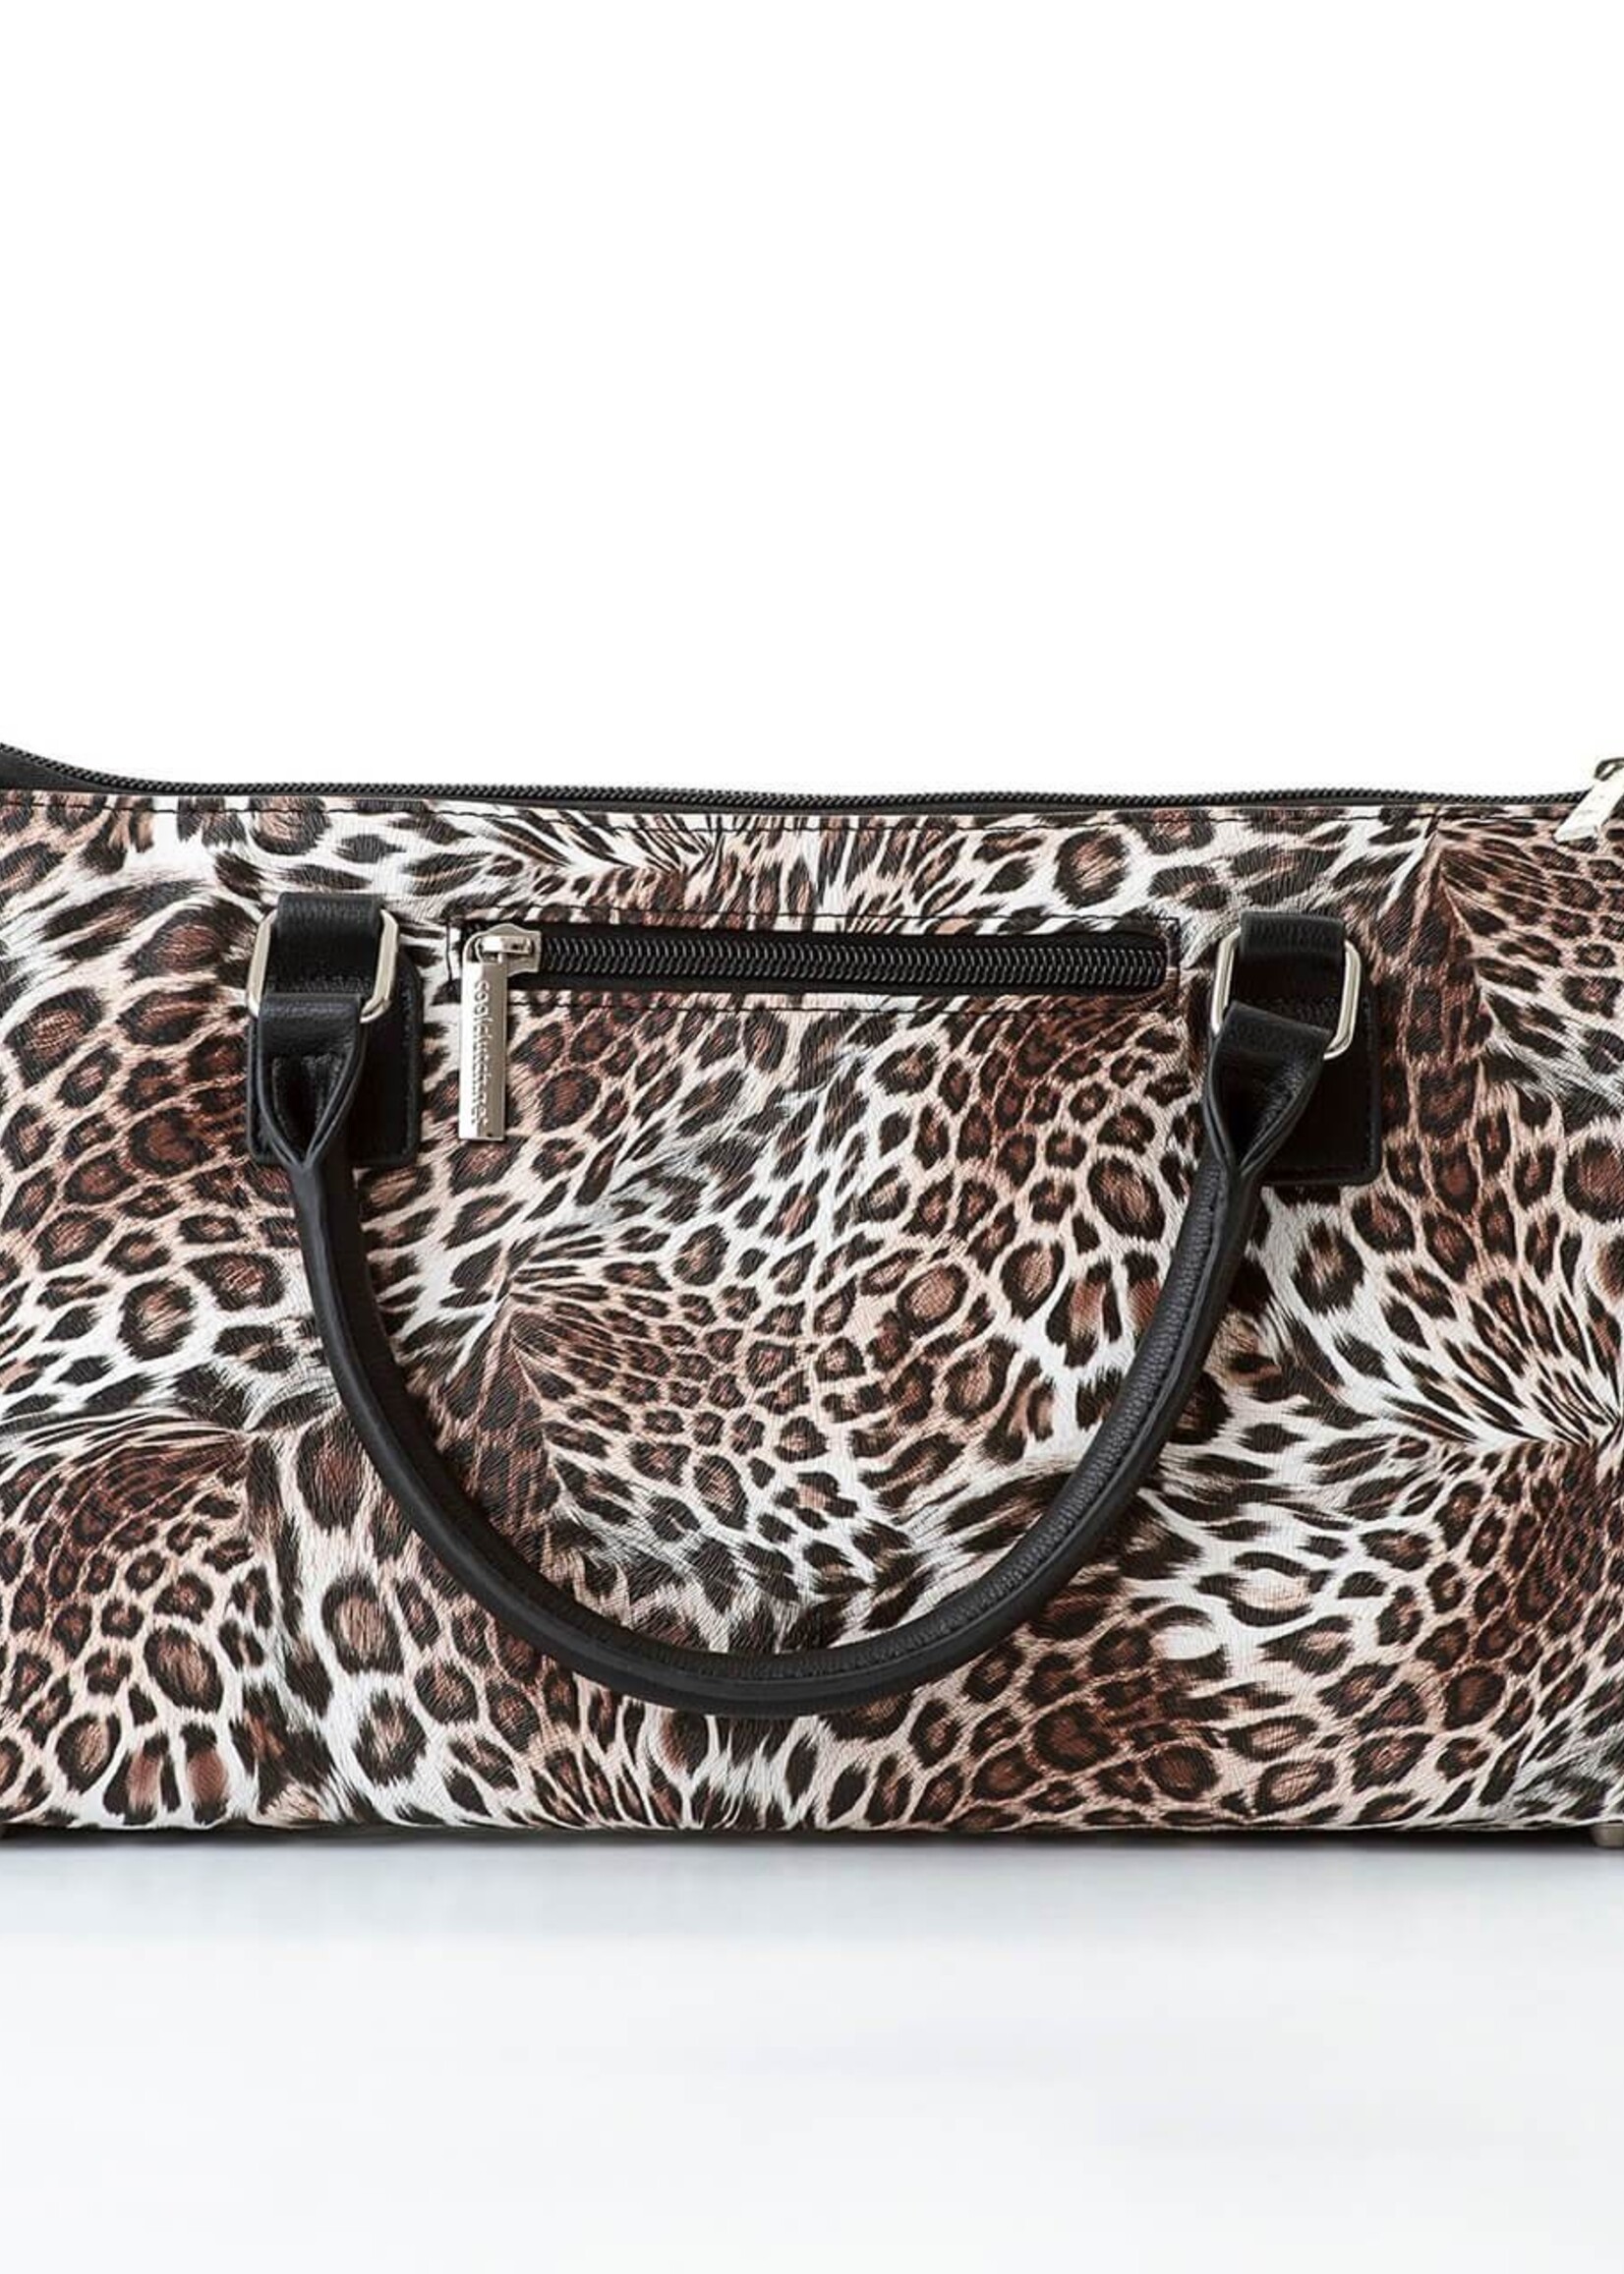 Cool Clutch Handbags Australia Yvonne Cool Clutch